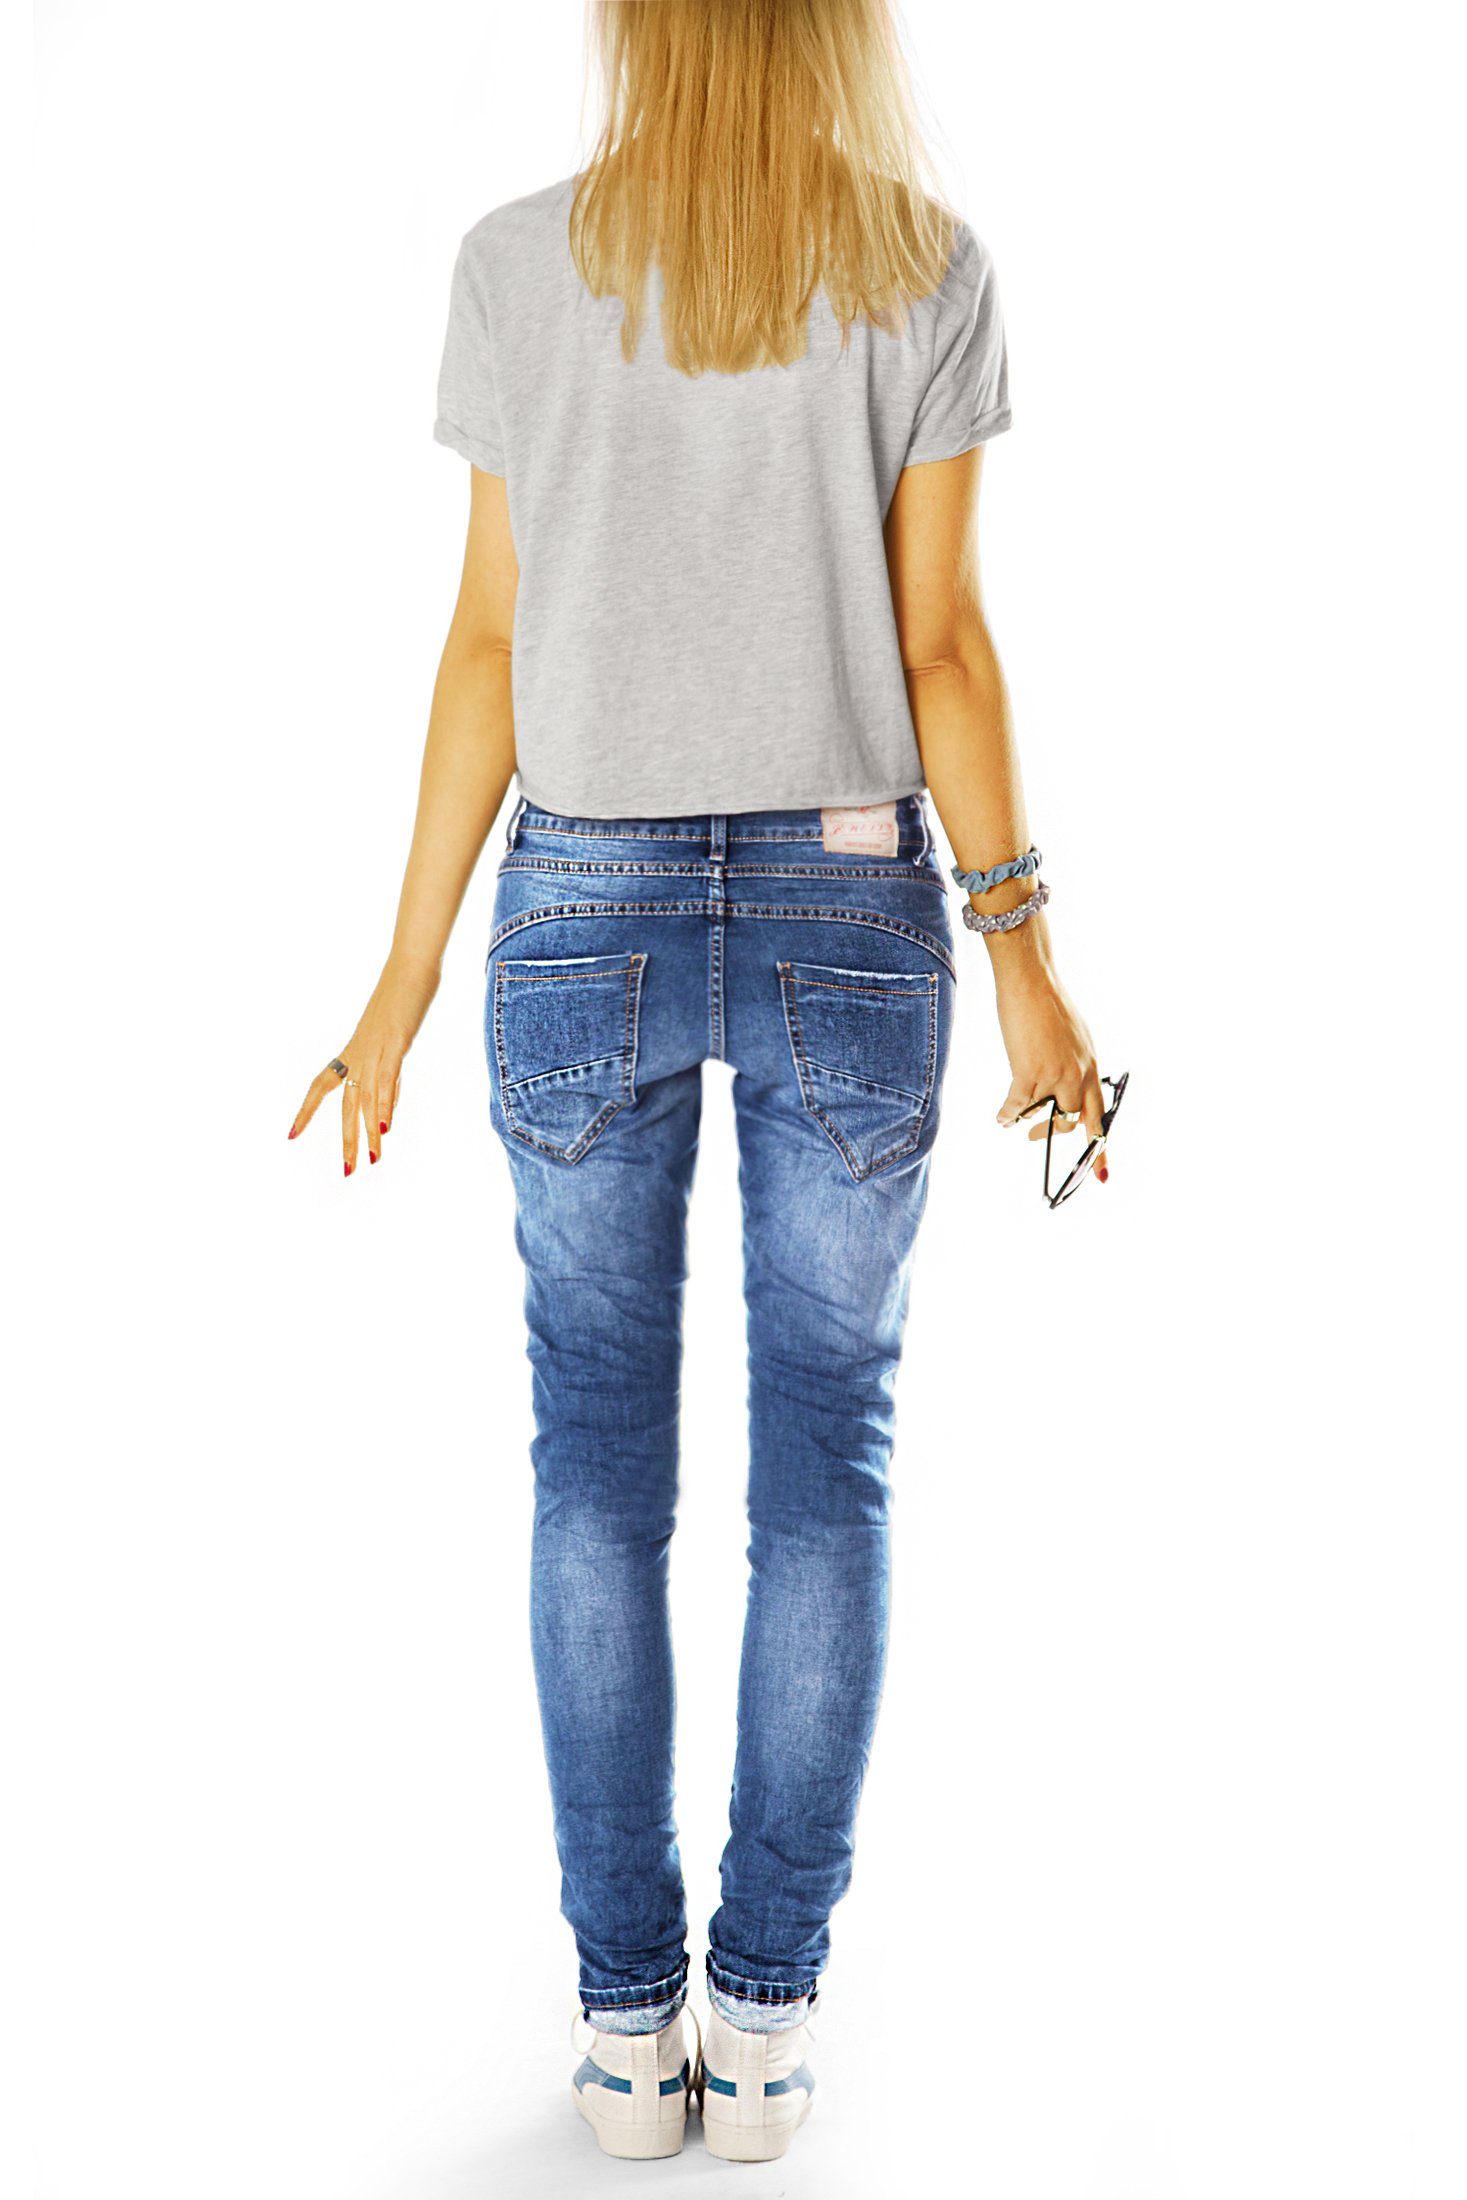 styled j6f-1 Hose Rise Low Low-rise-Jeans be Stretch-Anteil, - Slim Jeans Hüftjeans Fit Damen- 5-Pocket-Style bequeme mit